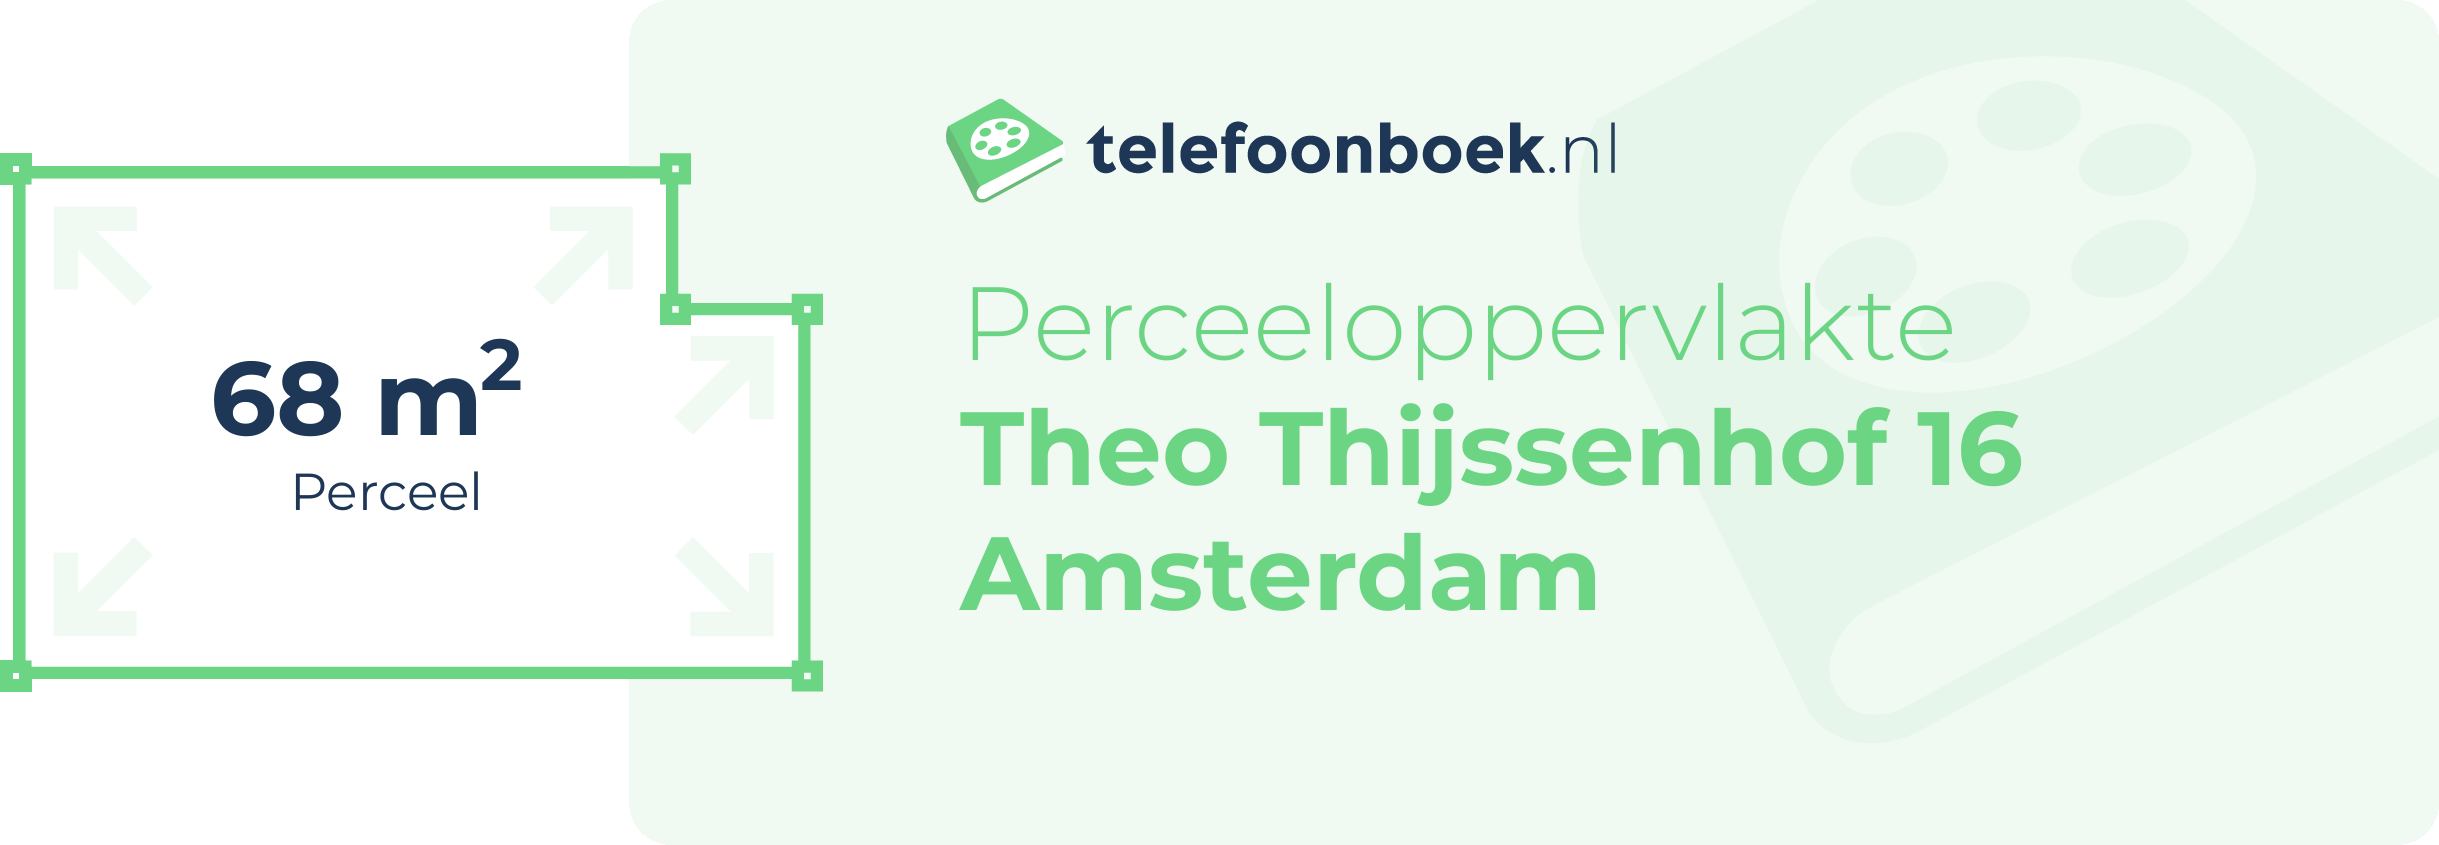 Perceeloppervlakte Theo Thijssenhof 16 Amsterdam